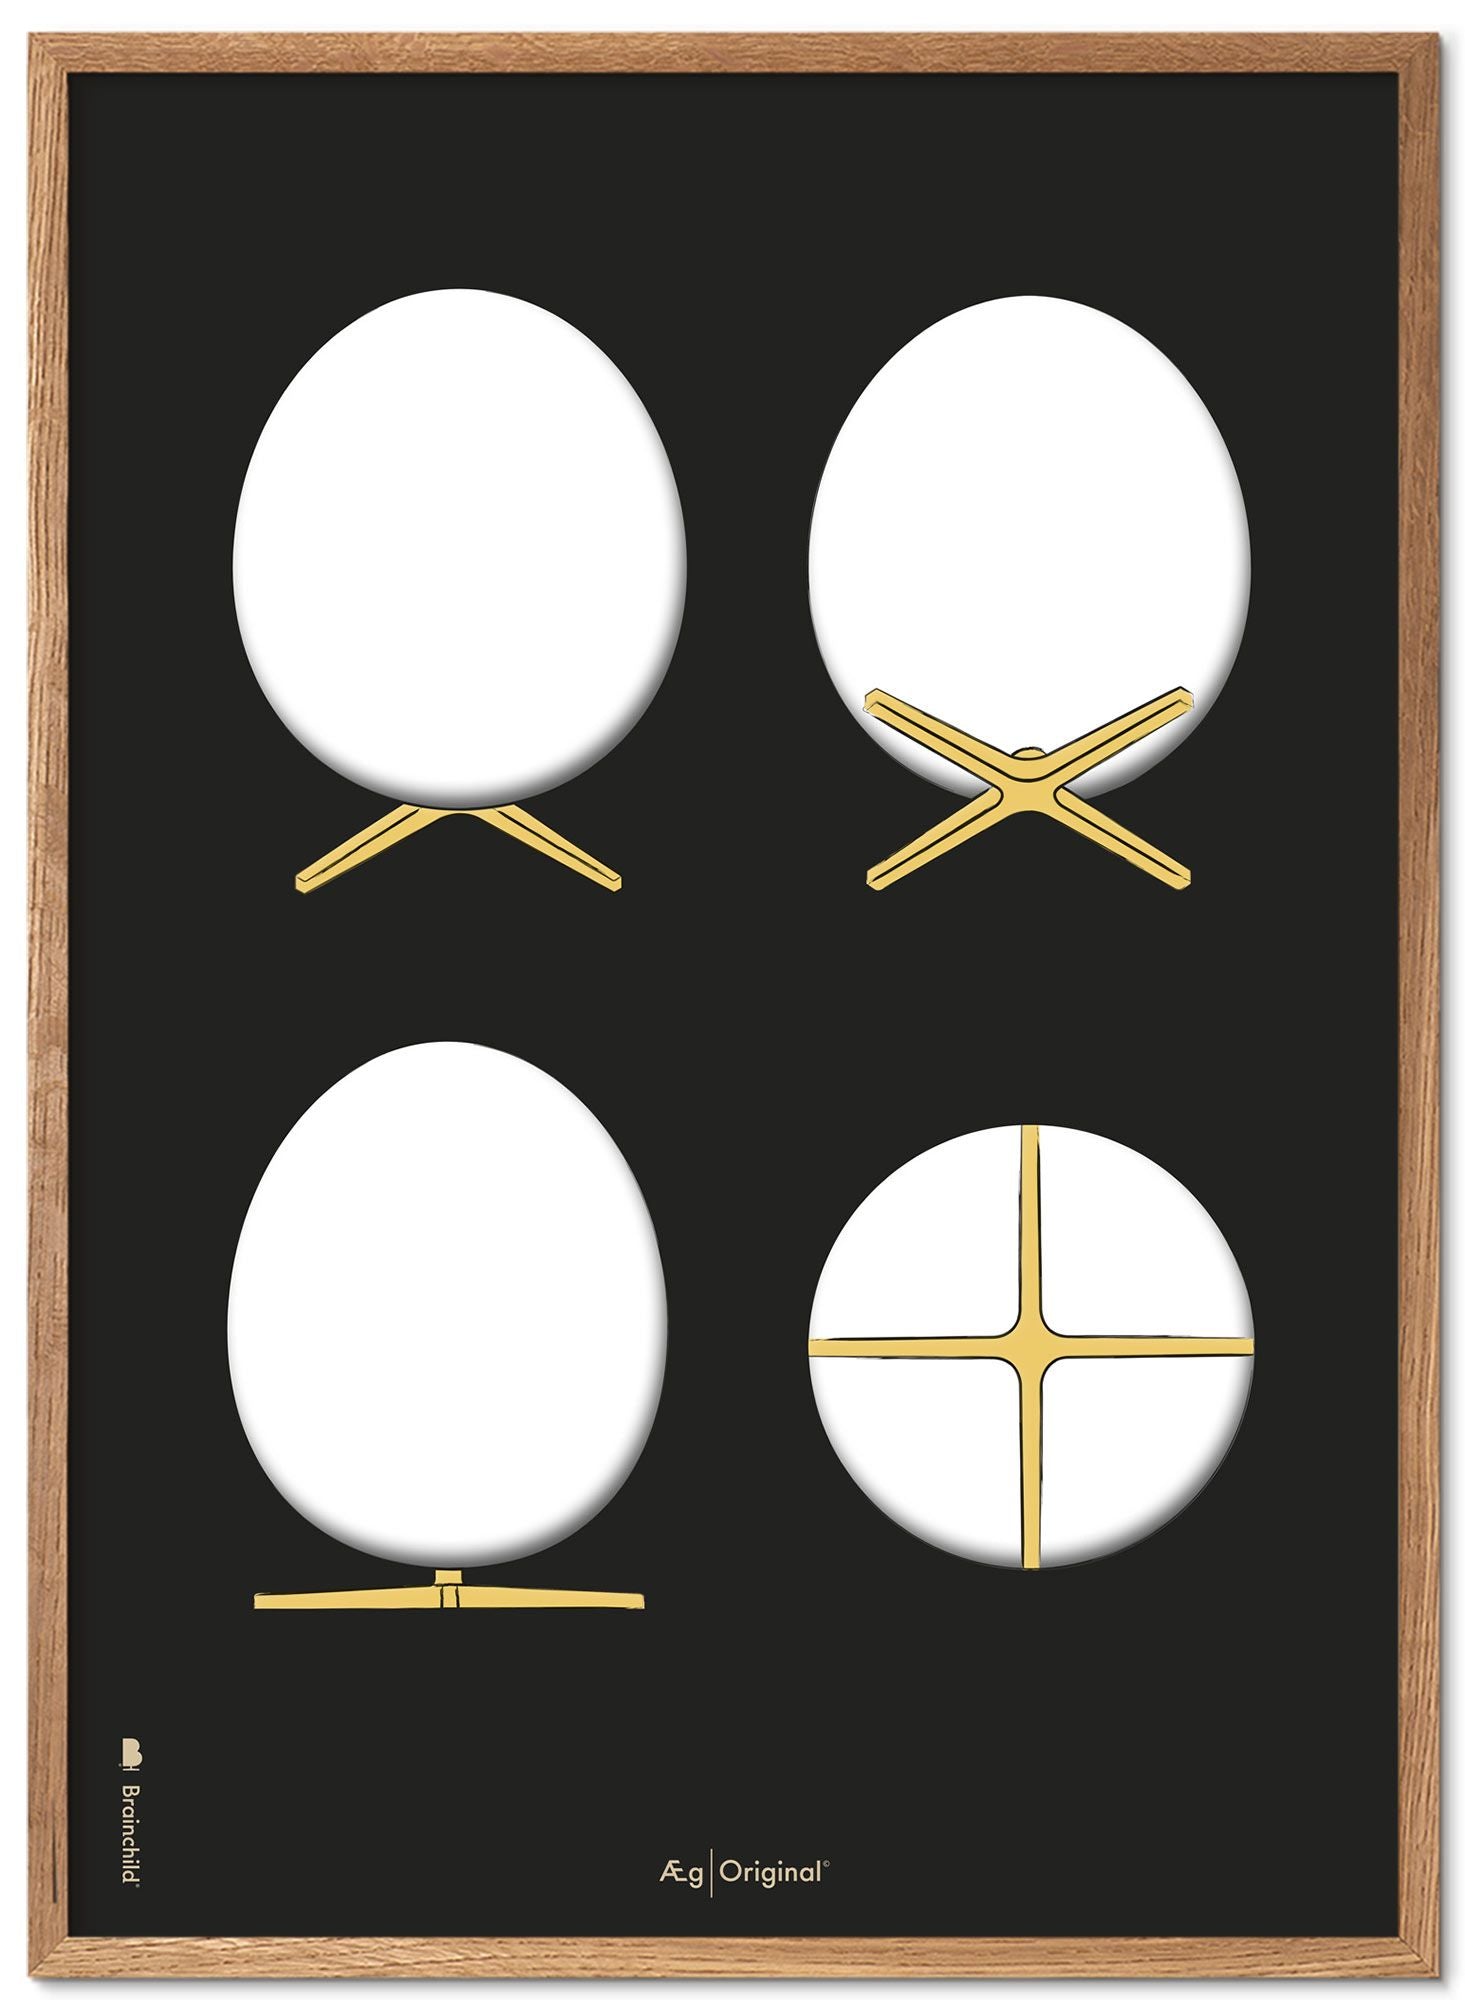 Brainchild The Egg Design Sketches Poster Frame Made Of Light Wood A5, Black Background